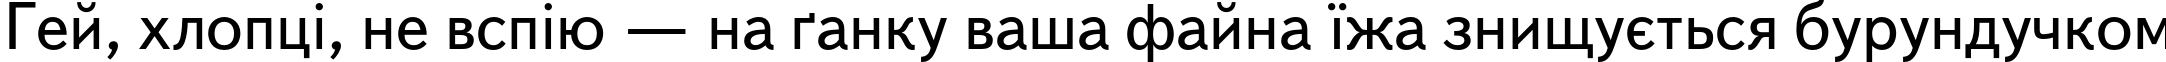 Пример написания шрифтом TextBookC текста на украинском